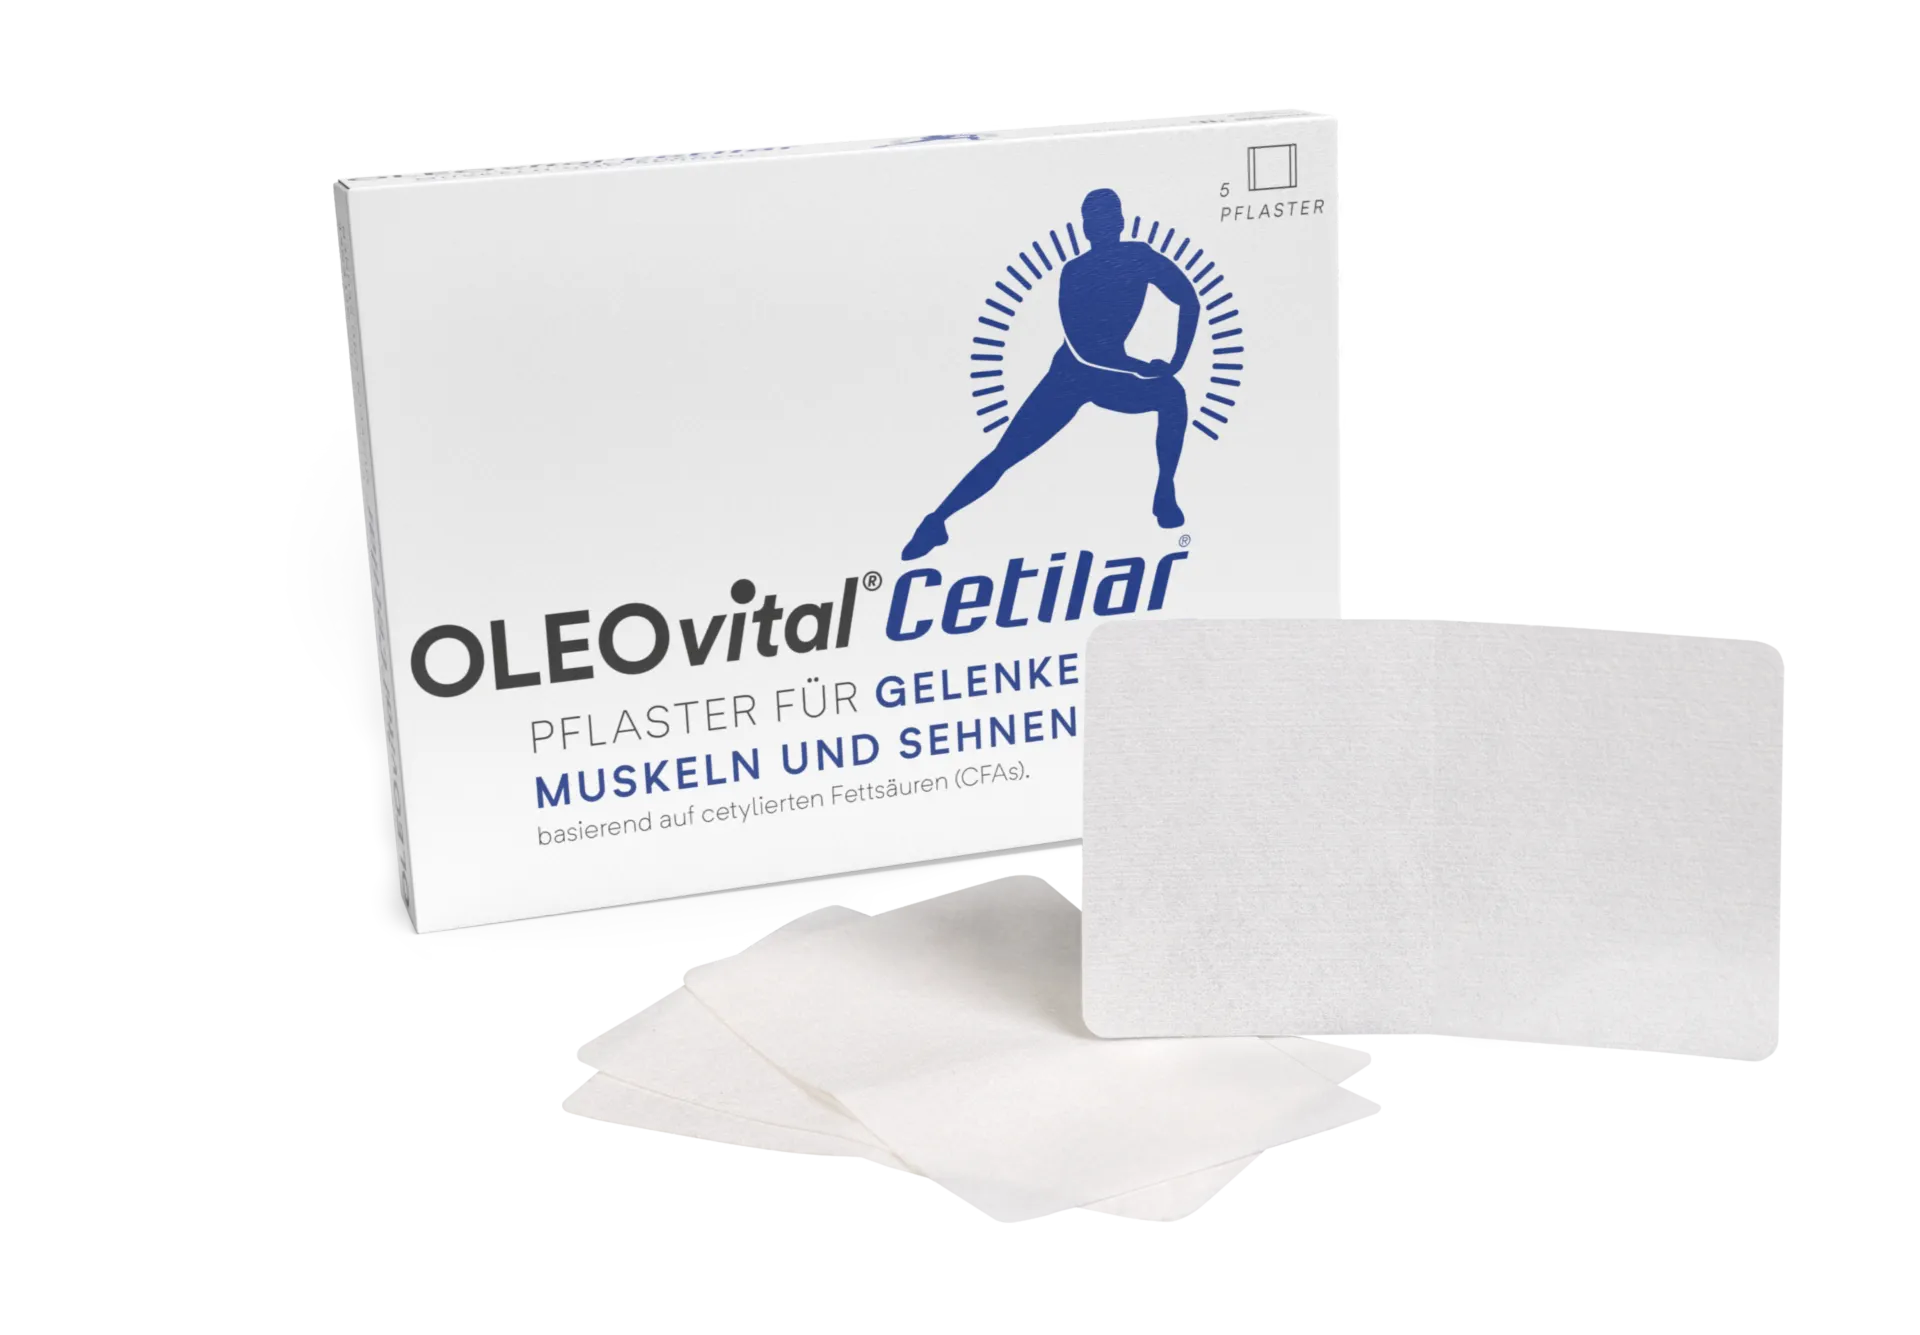 OLEOvital_Cetilar_Pflaster+Produkt